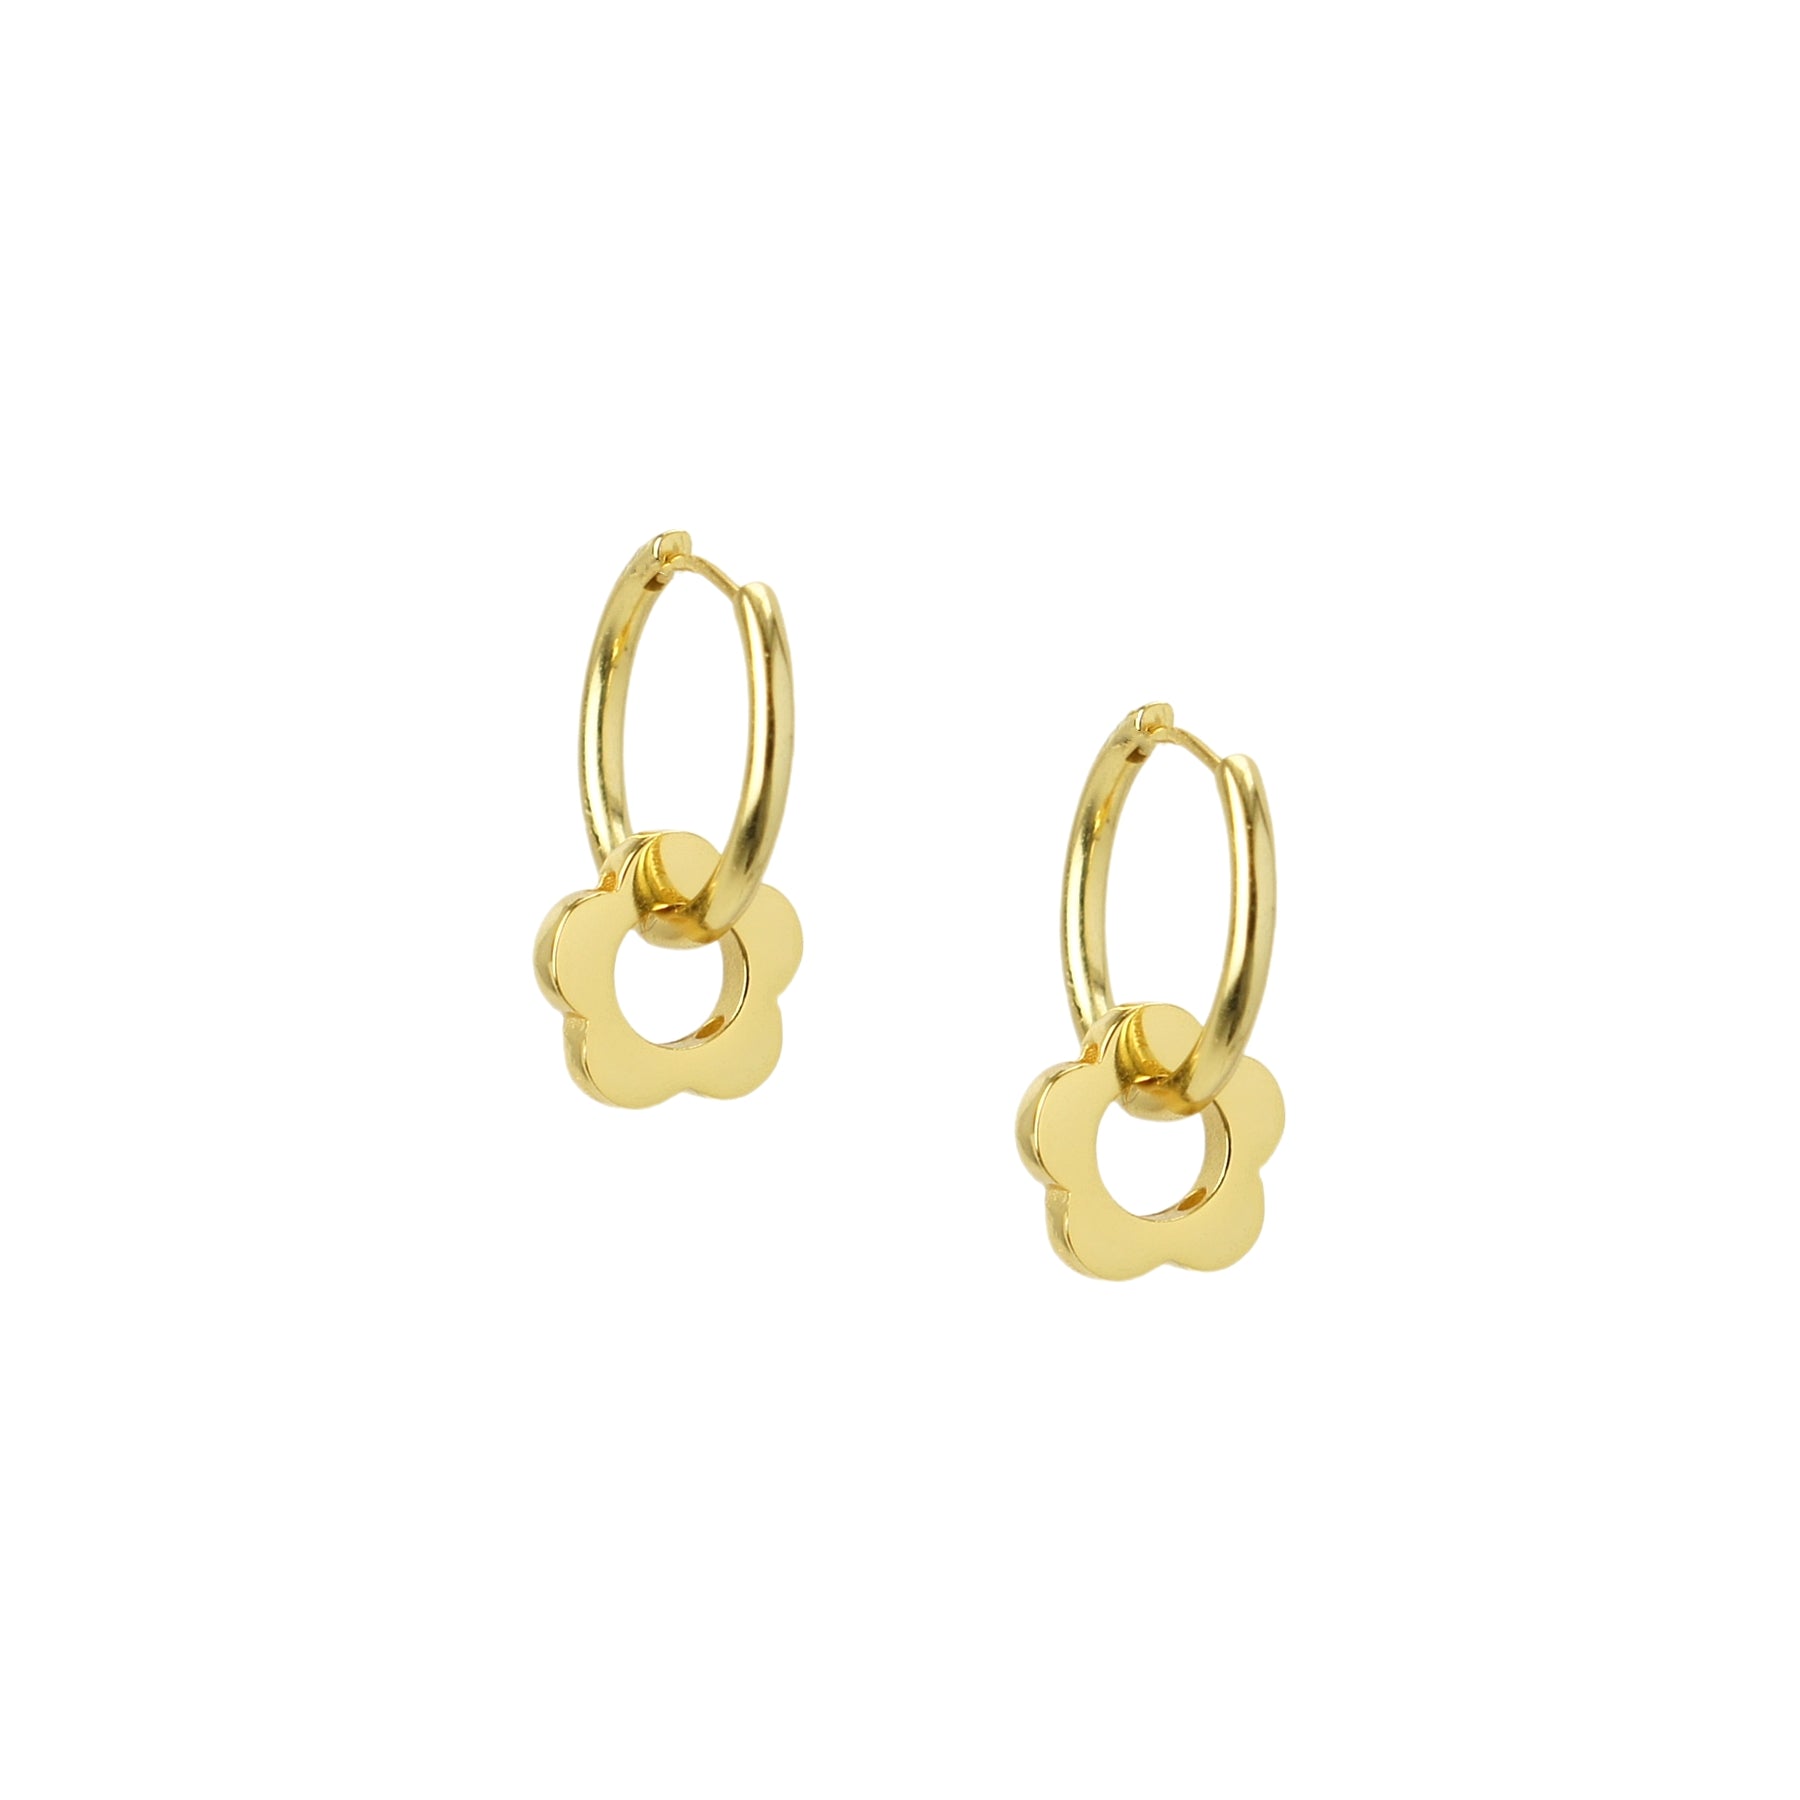 Flower Power Detachable Charm Hoop Earrings, Gold Vermeil